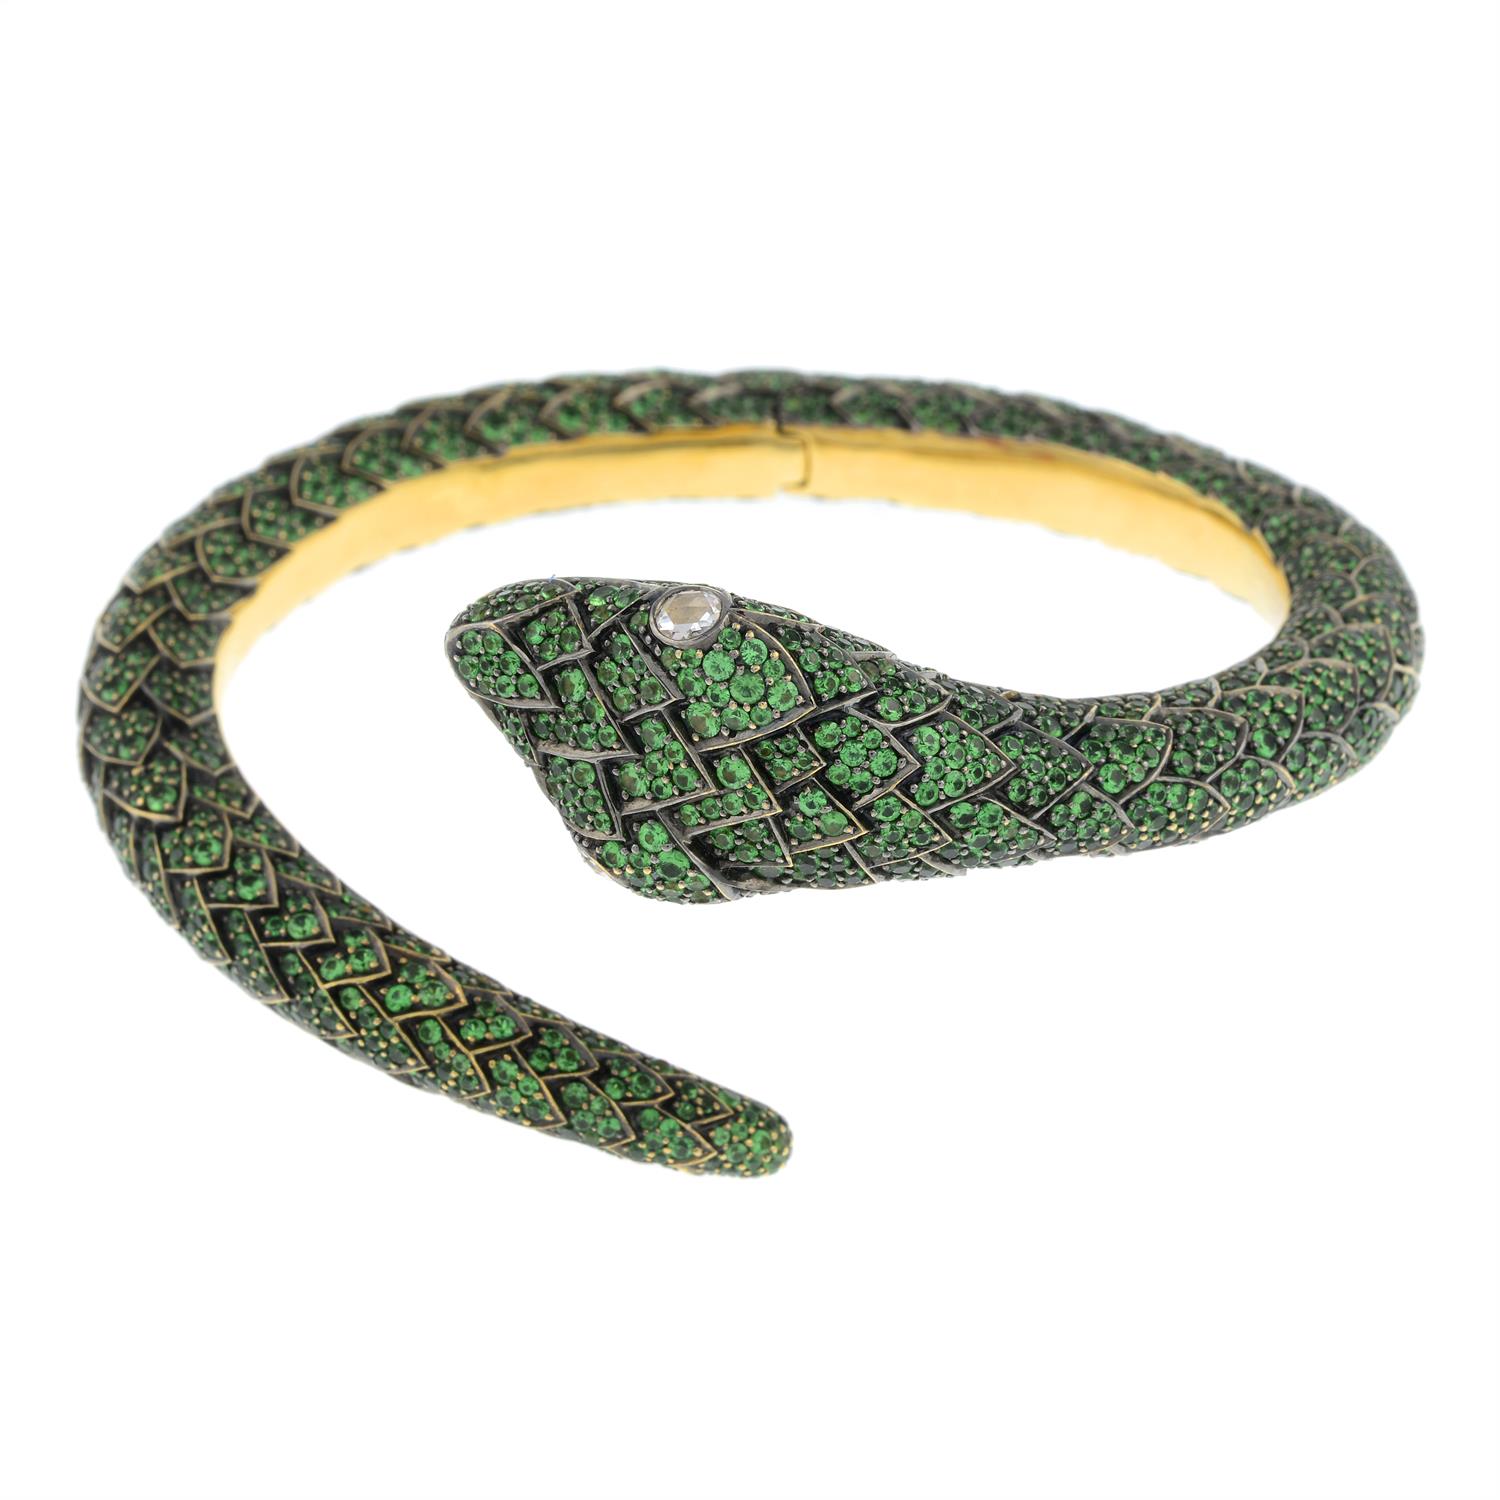 18ct gold gem 'Protector' snake bangle, by Asprey - Image 2 of 6